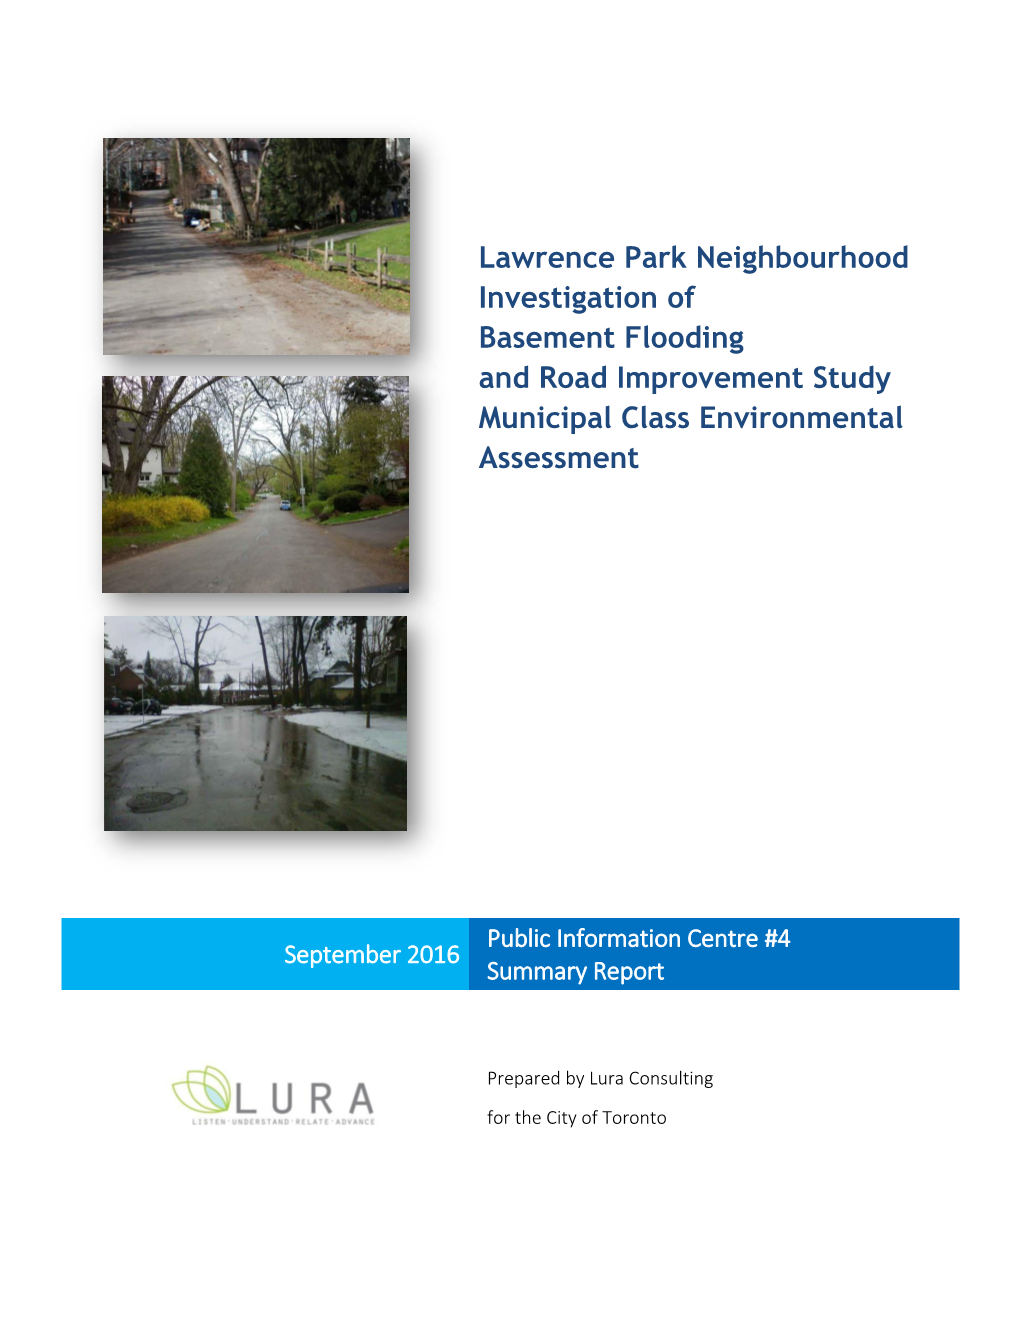 Lawrence Park Neighbourhood Investigation of Basement Flooding and Road Improvement Study Municipal Class Environmental Assessment